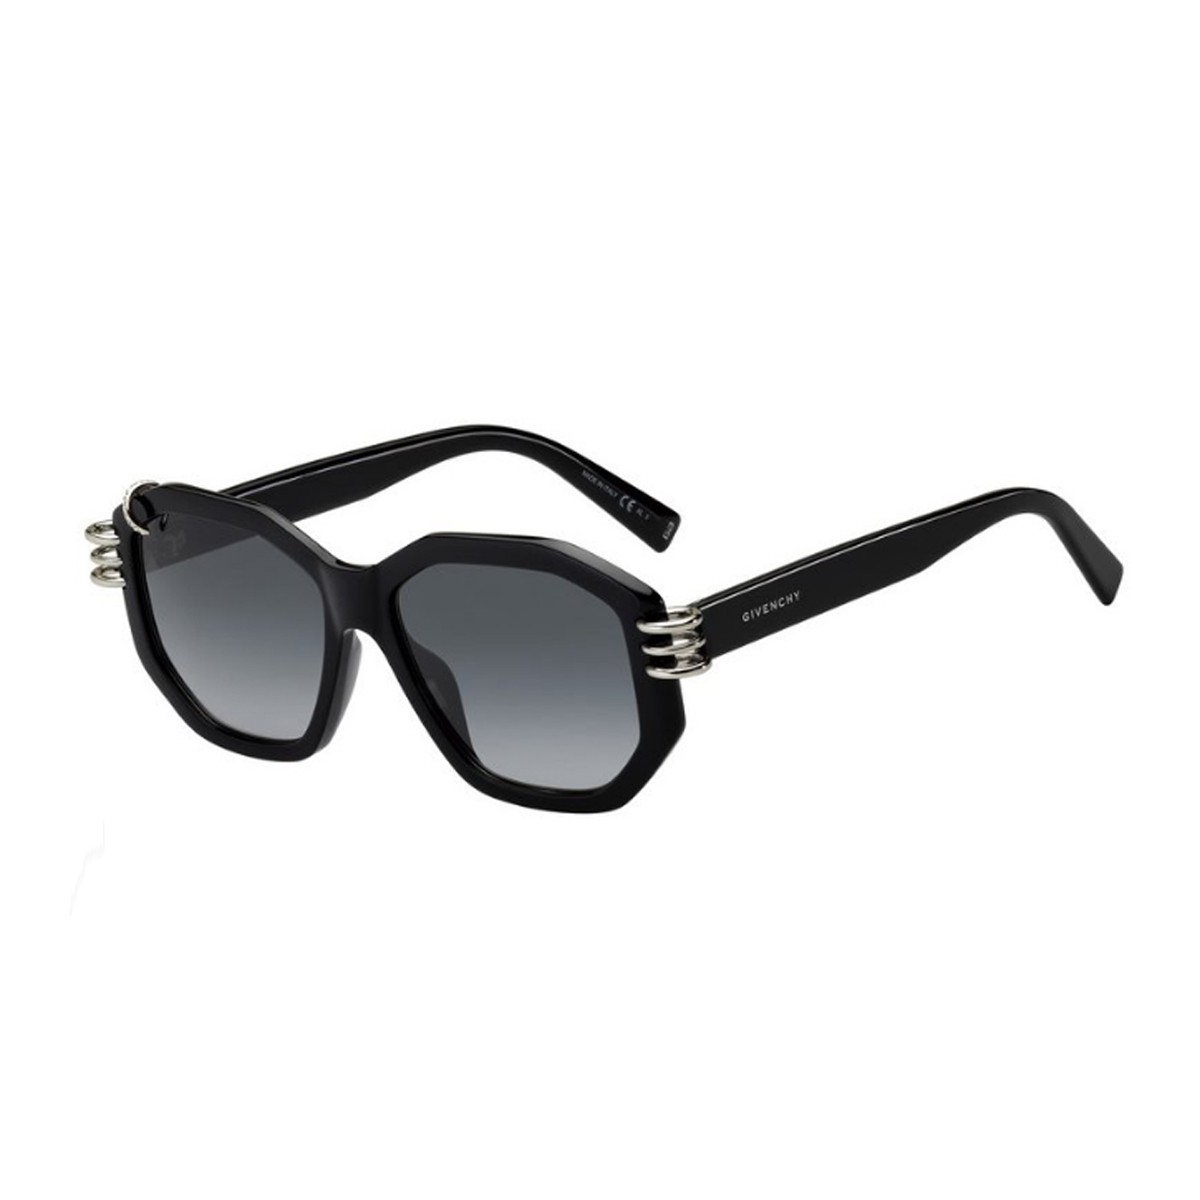 Givenchy Gv 7175/g/s Women's sunglasses | OtticaLucciola